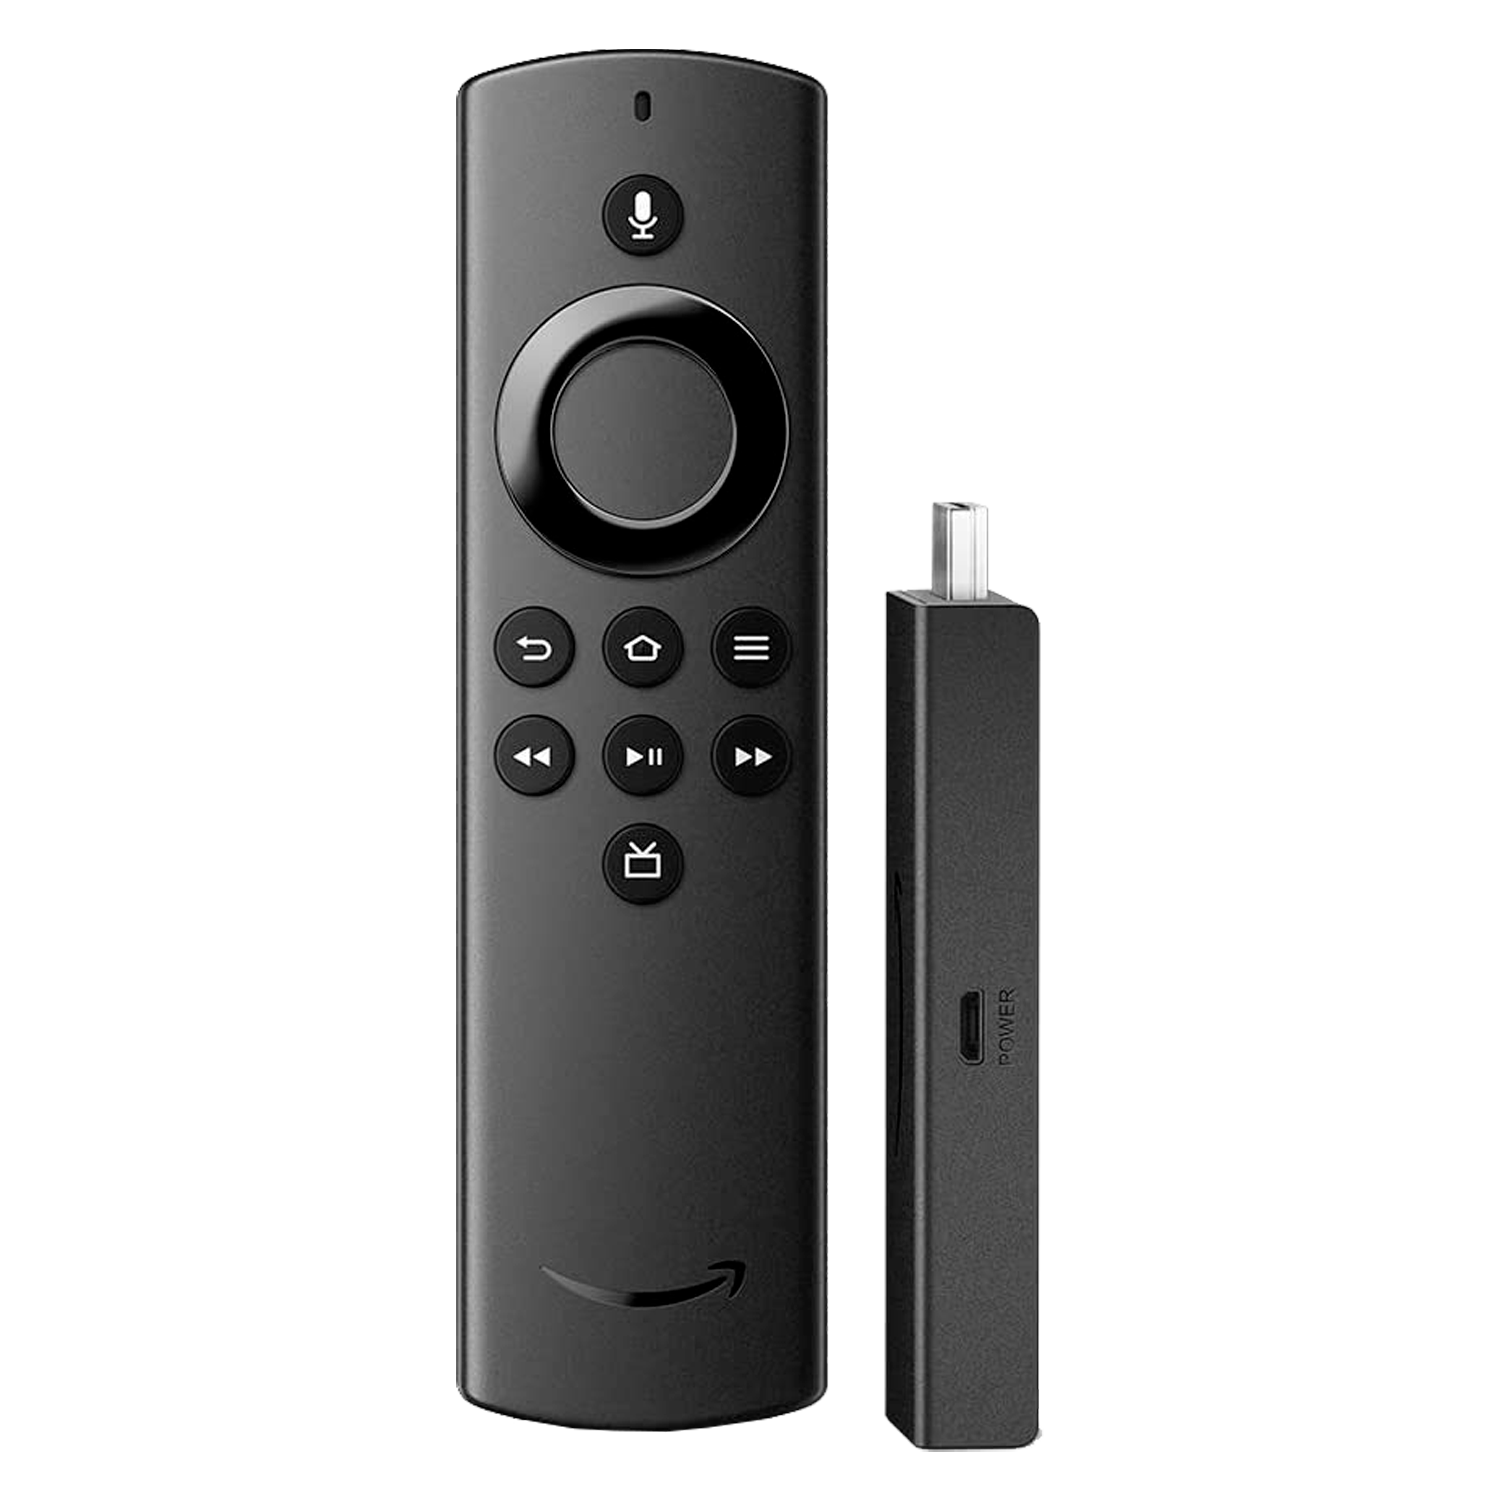 Amazon Fire TV Stick Lite - Preto Button (B07ZZVWB4L)